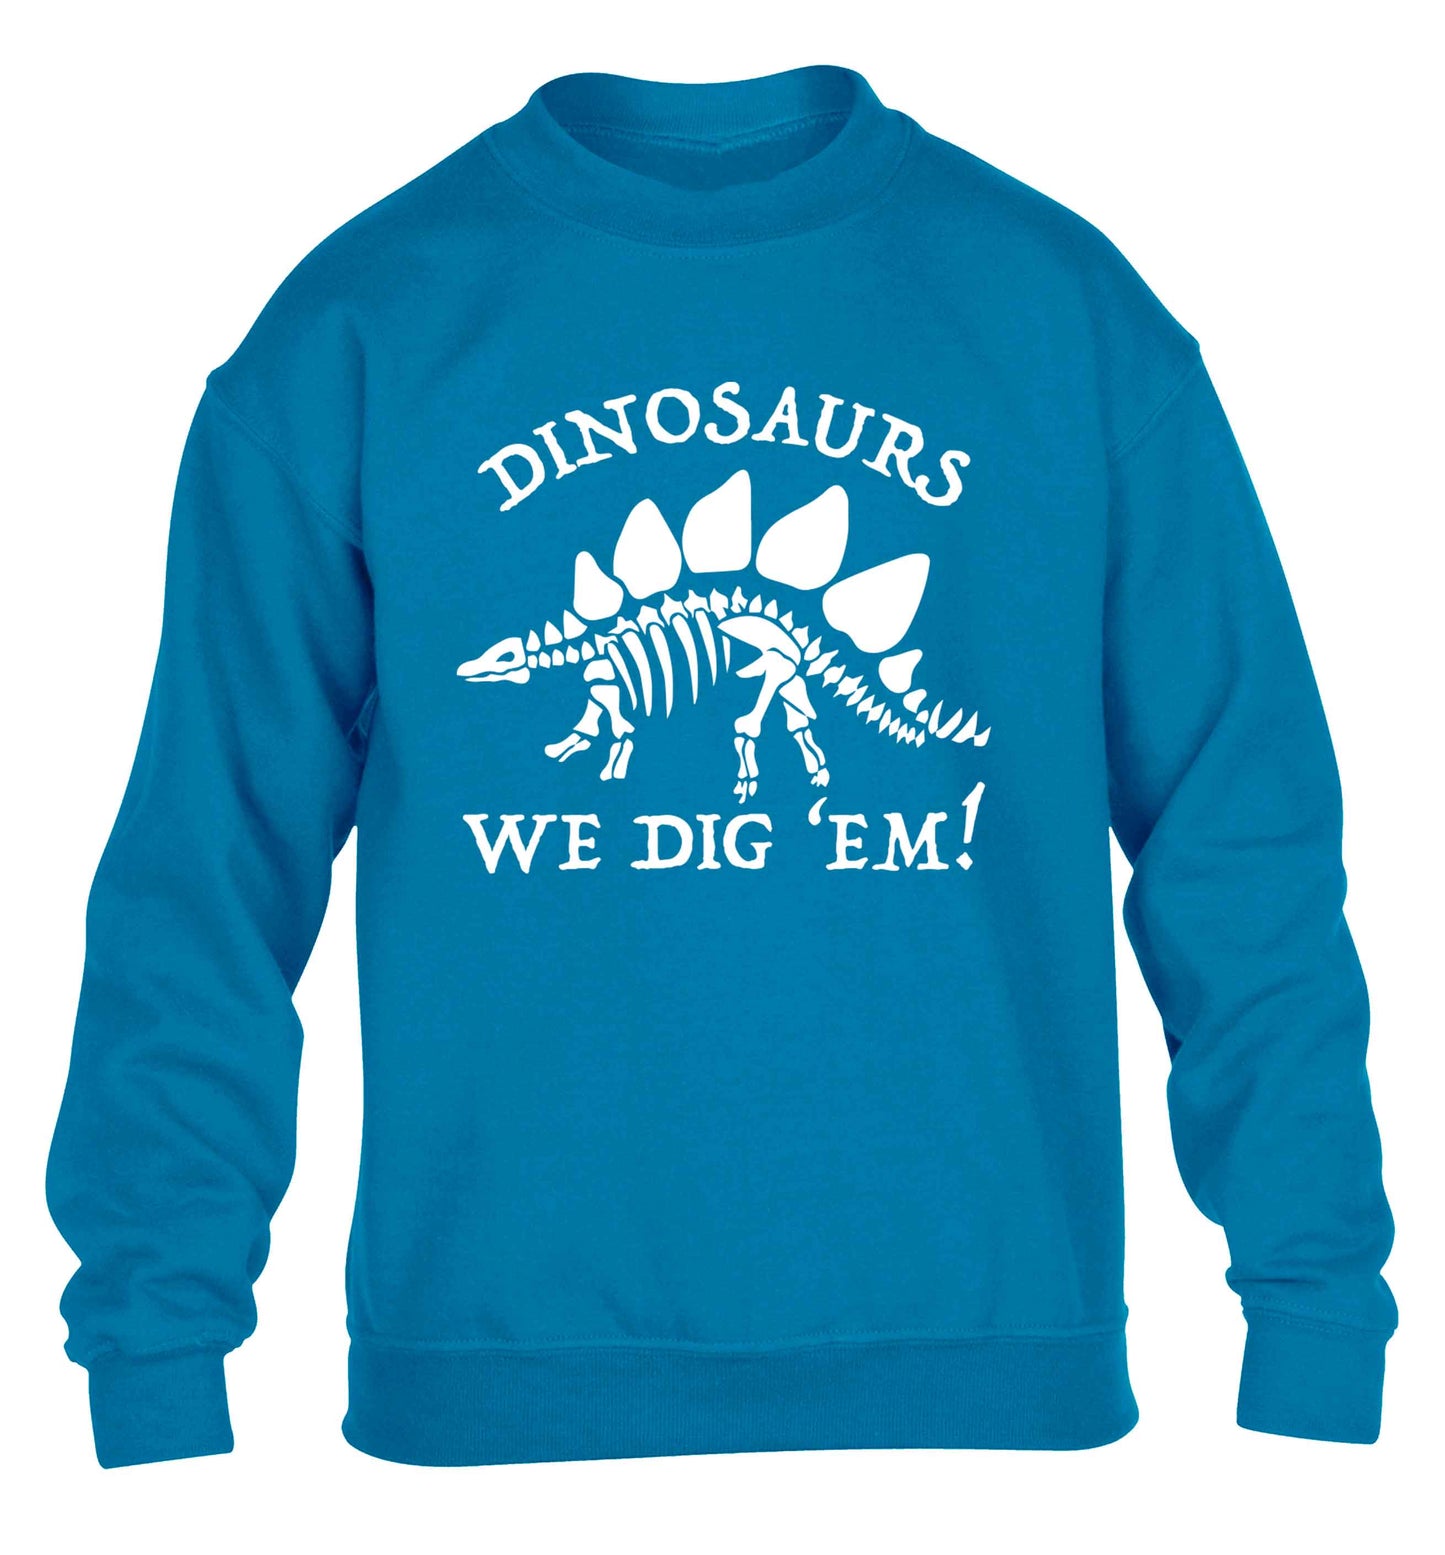 Dinosaurs we dig 'em! children's blue sweater 12-13 Years